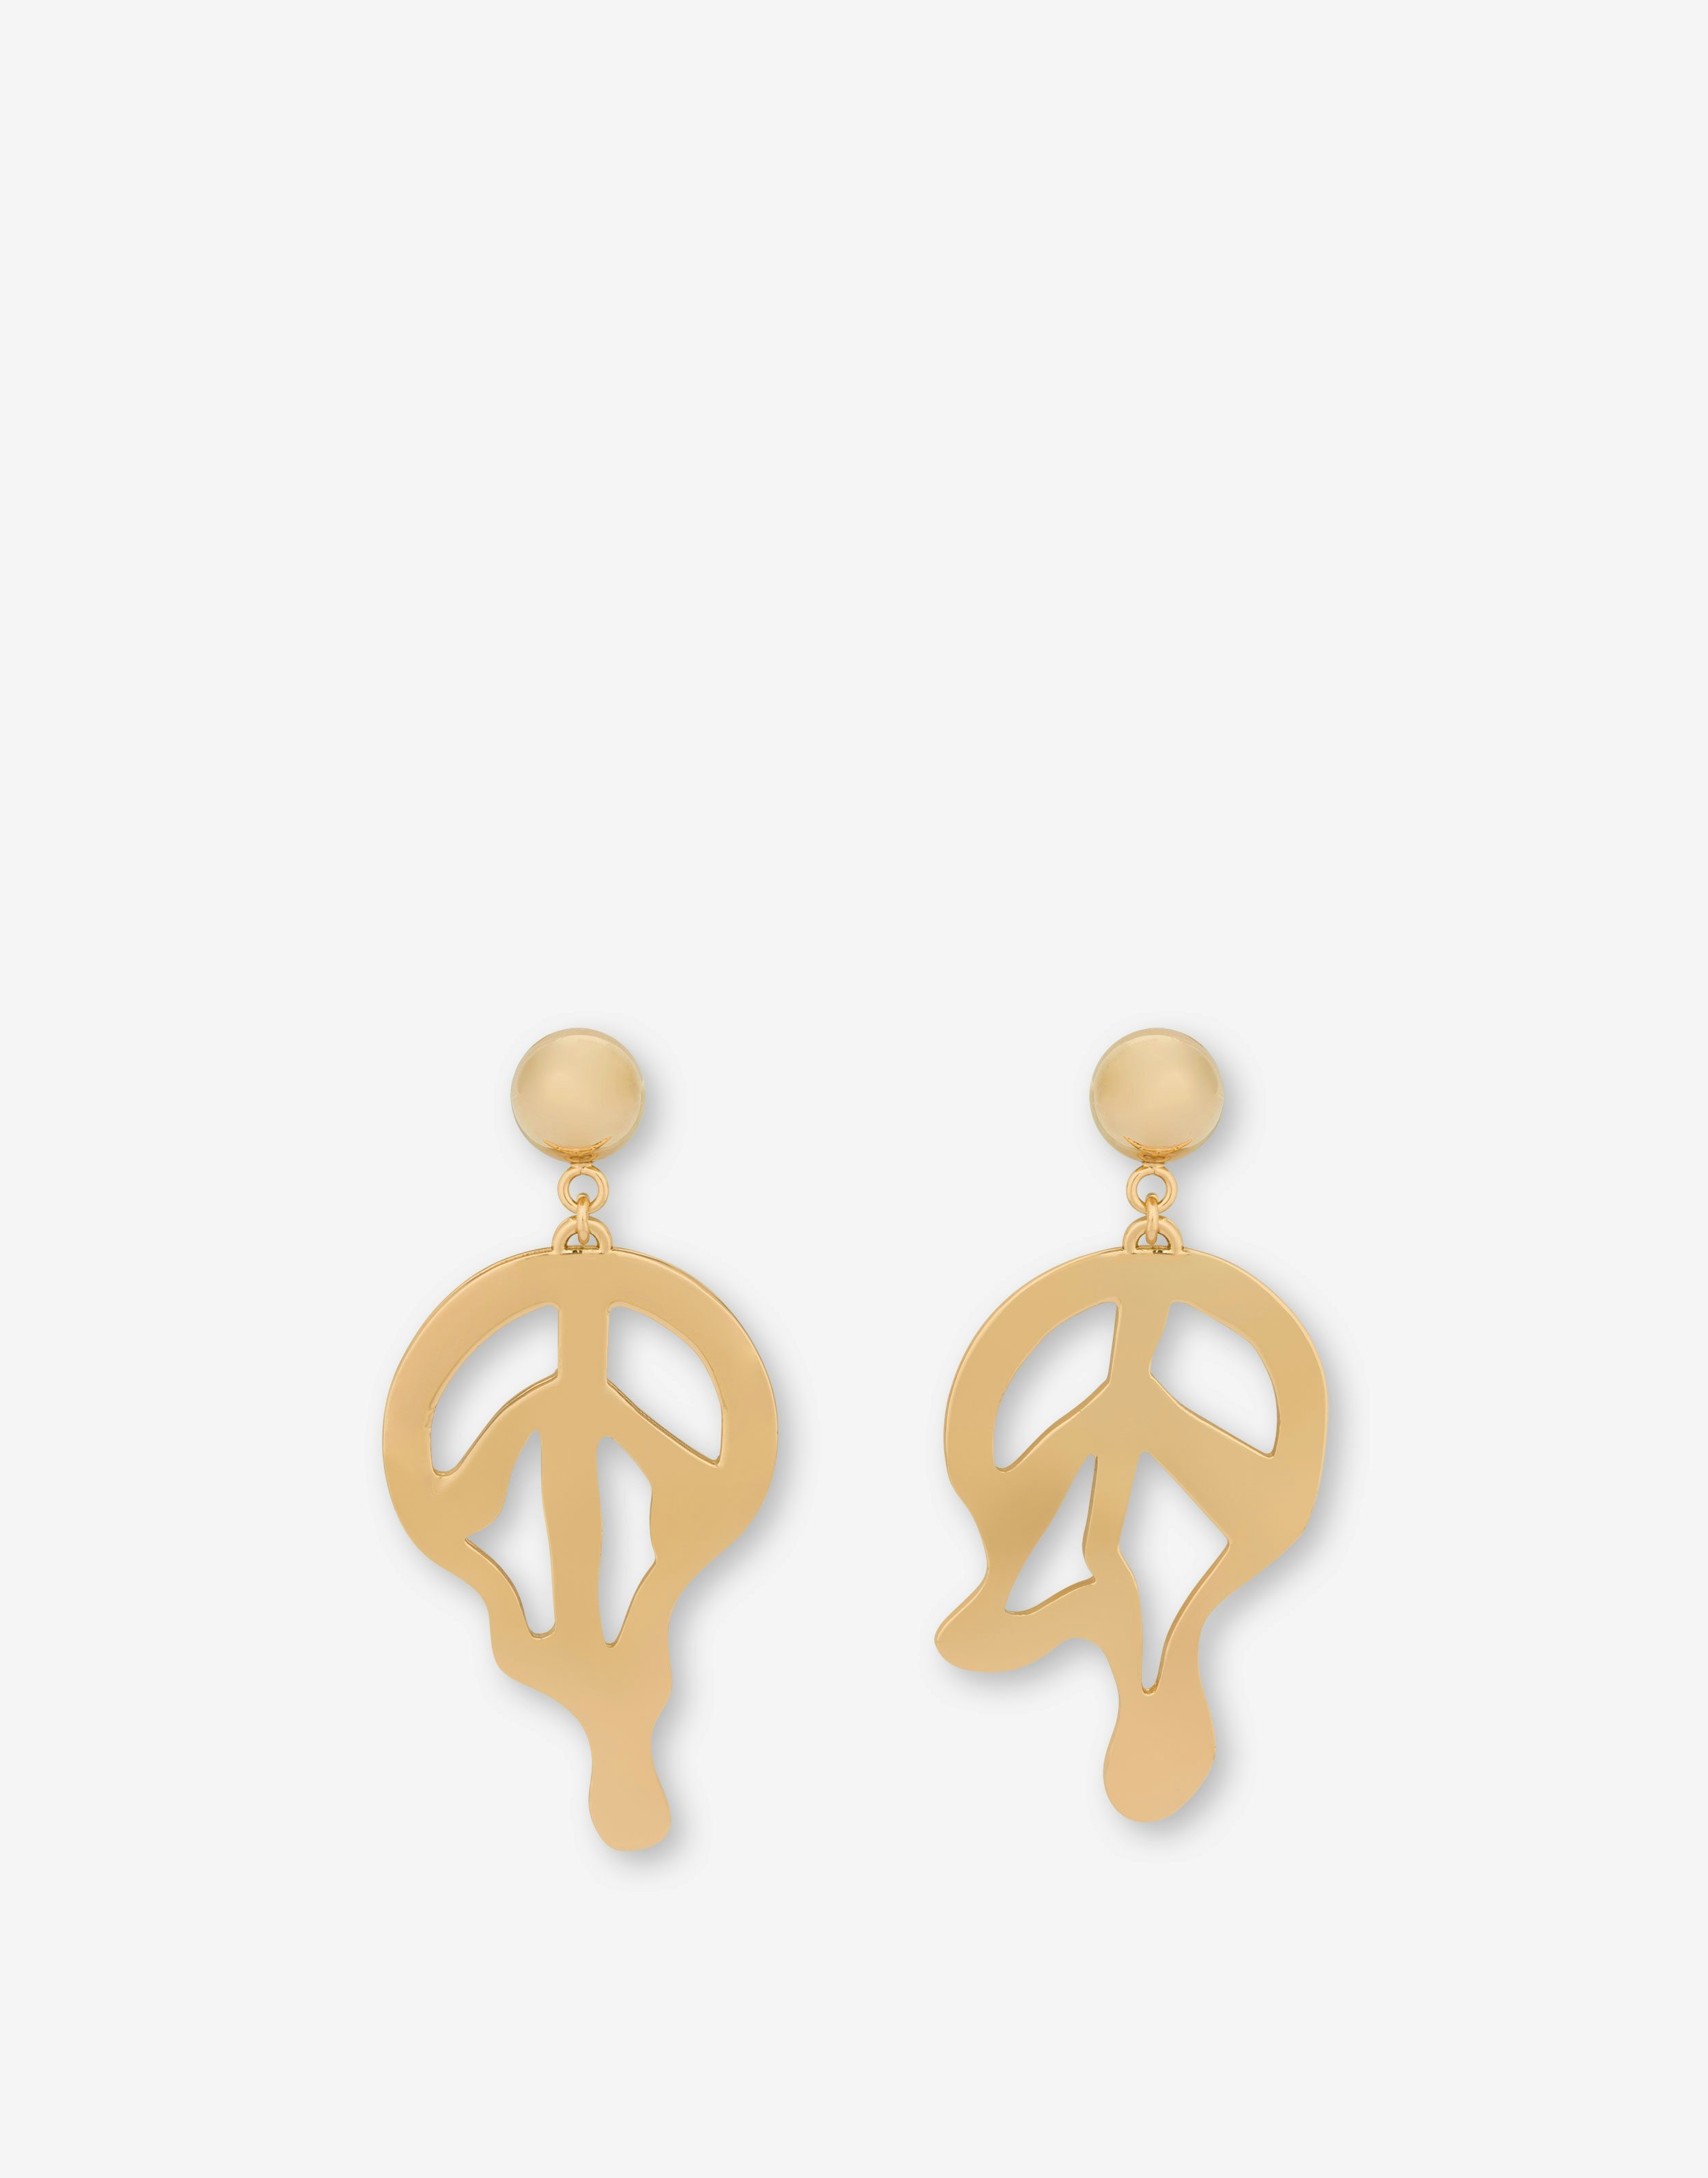 Morphed Peace Symbol drop earrings